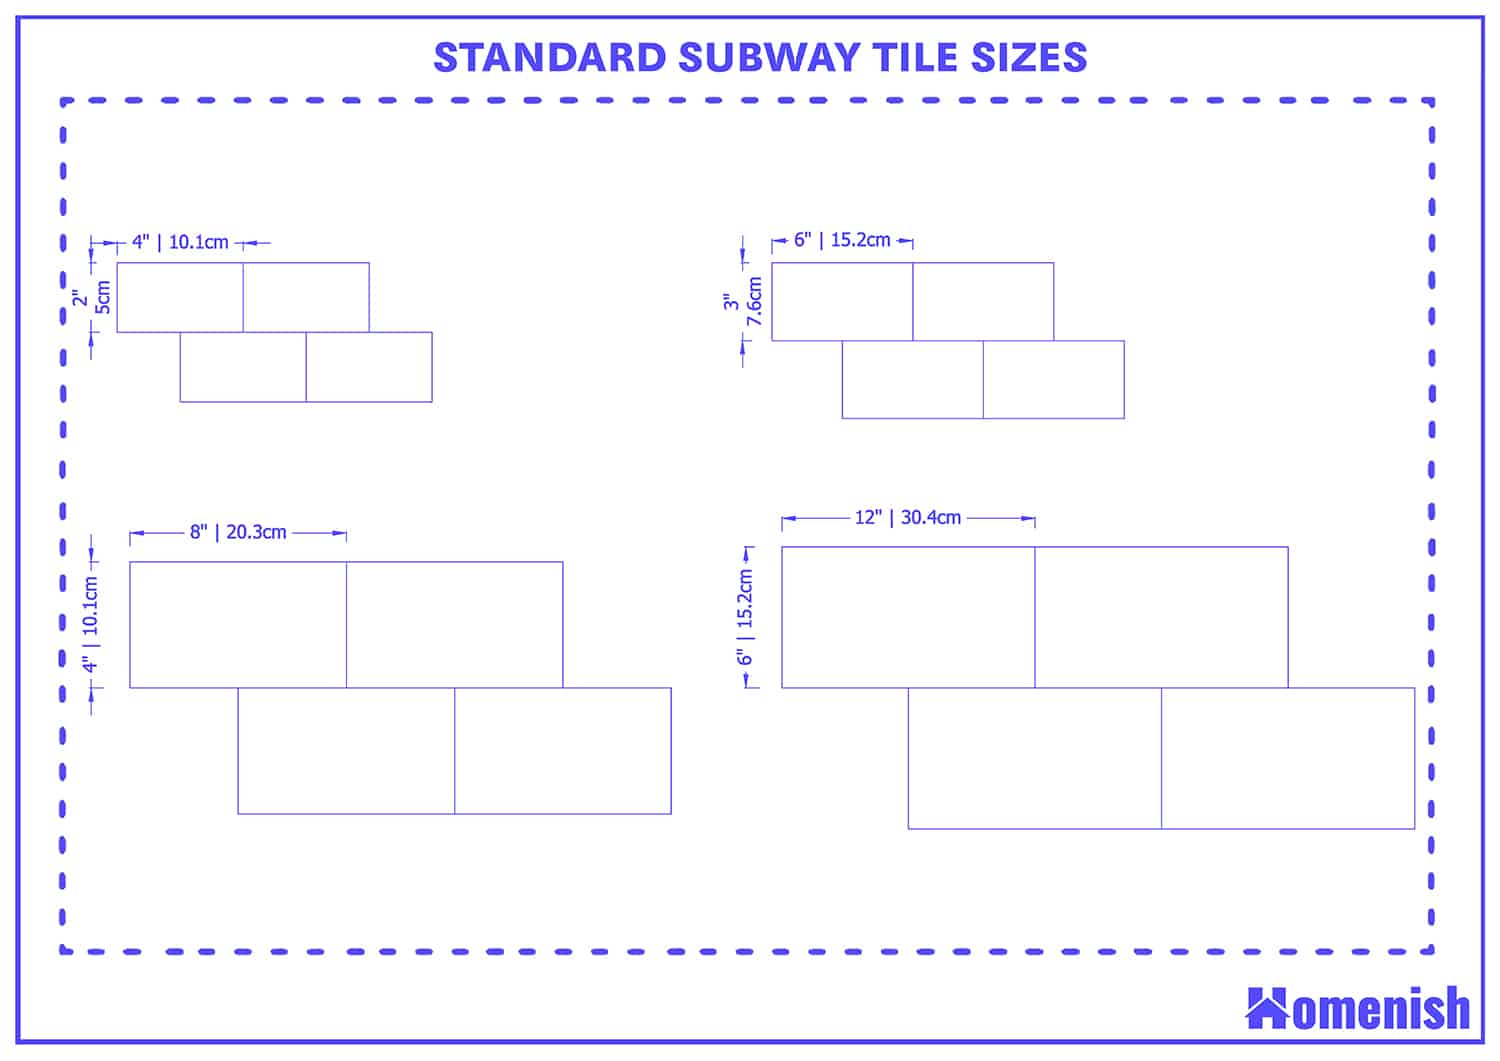 Standard subway tile sizes